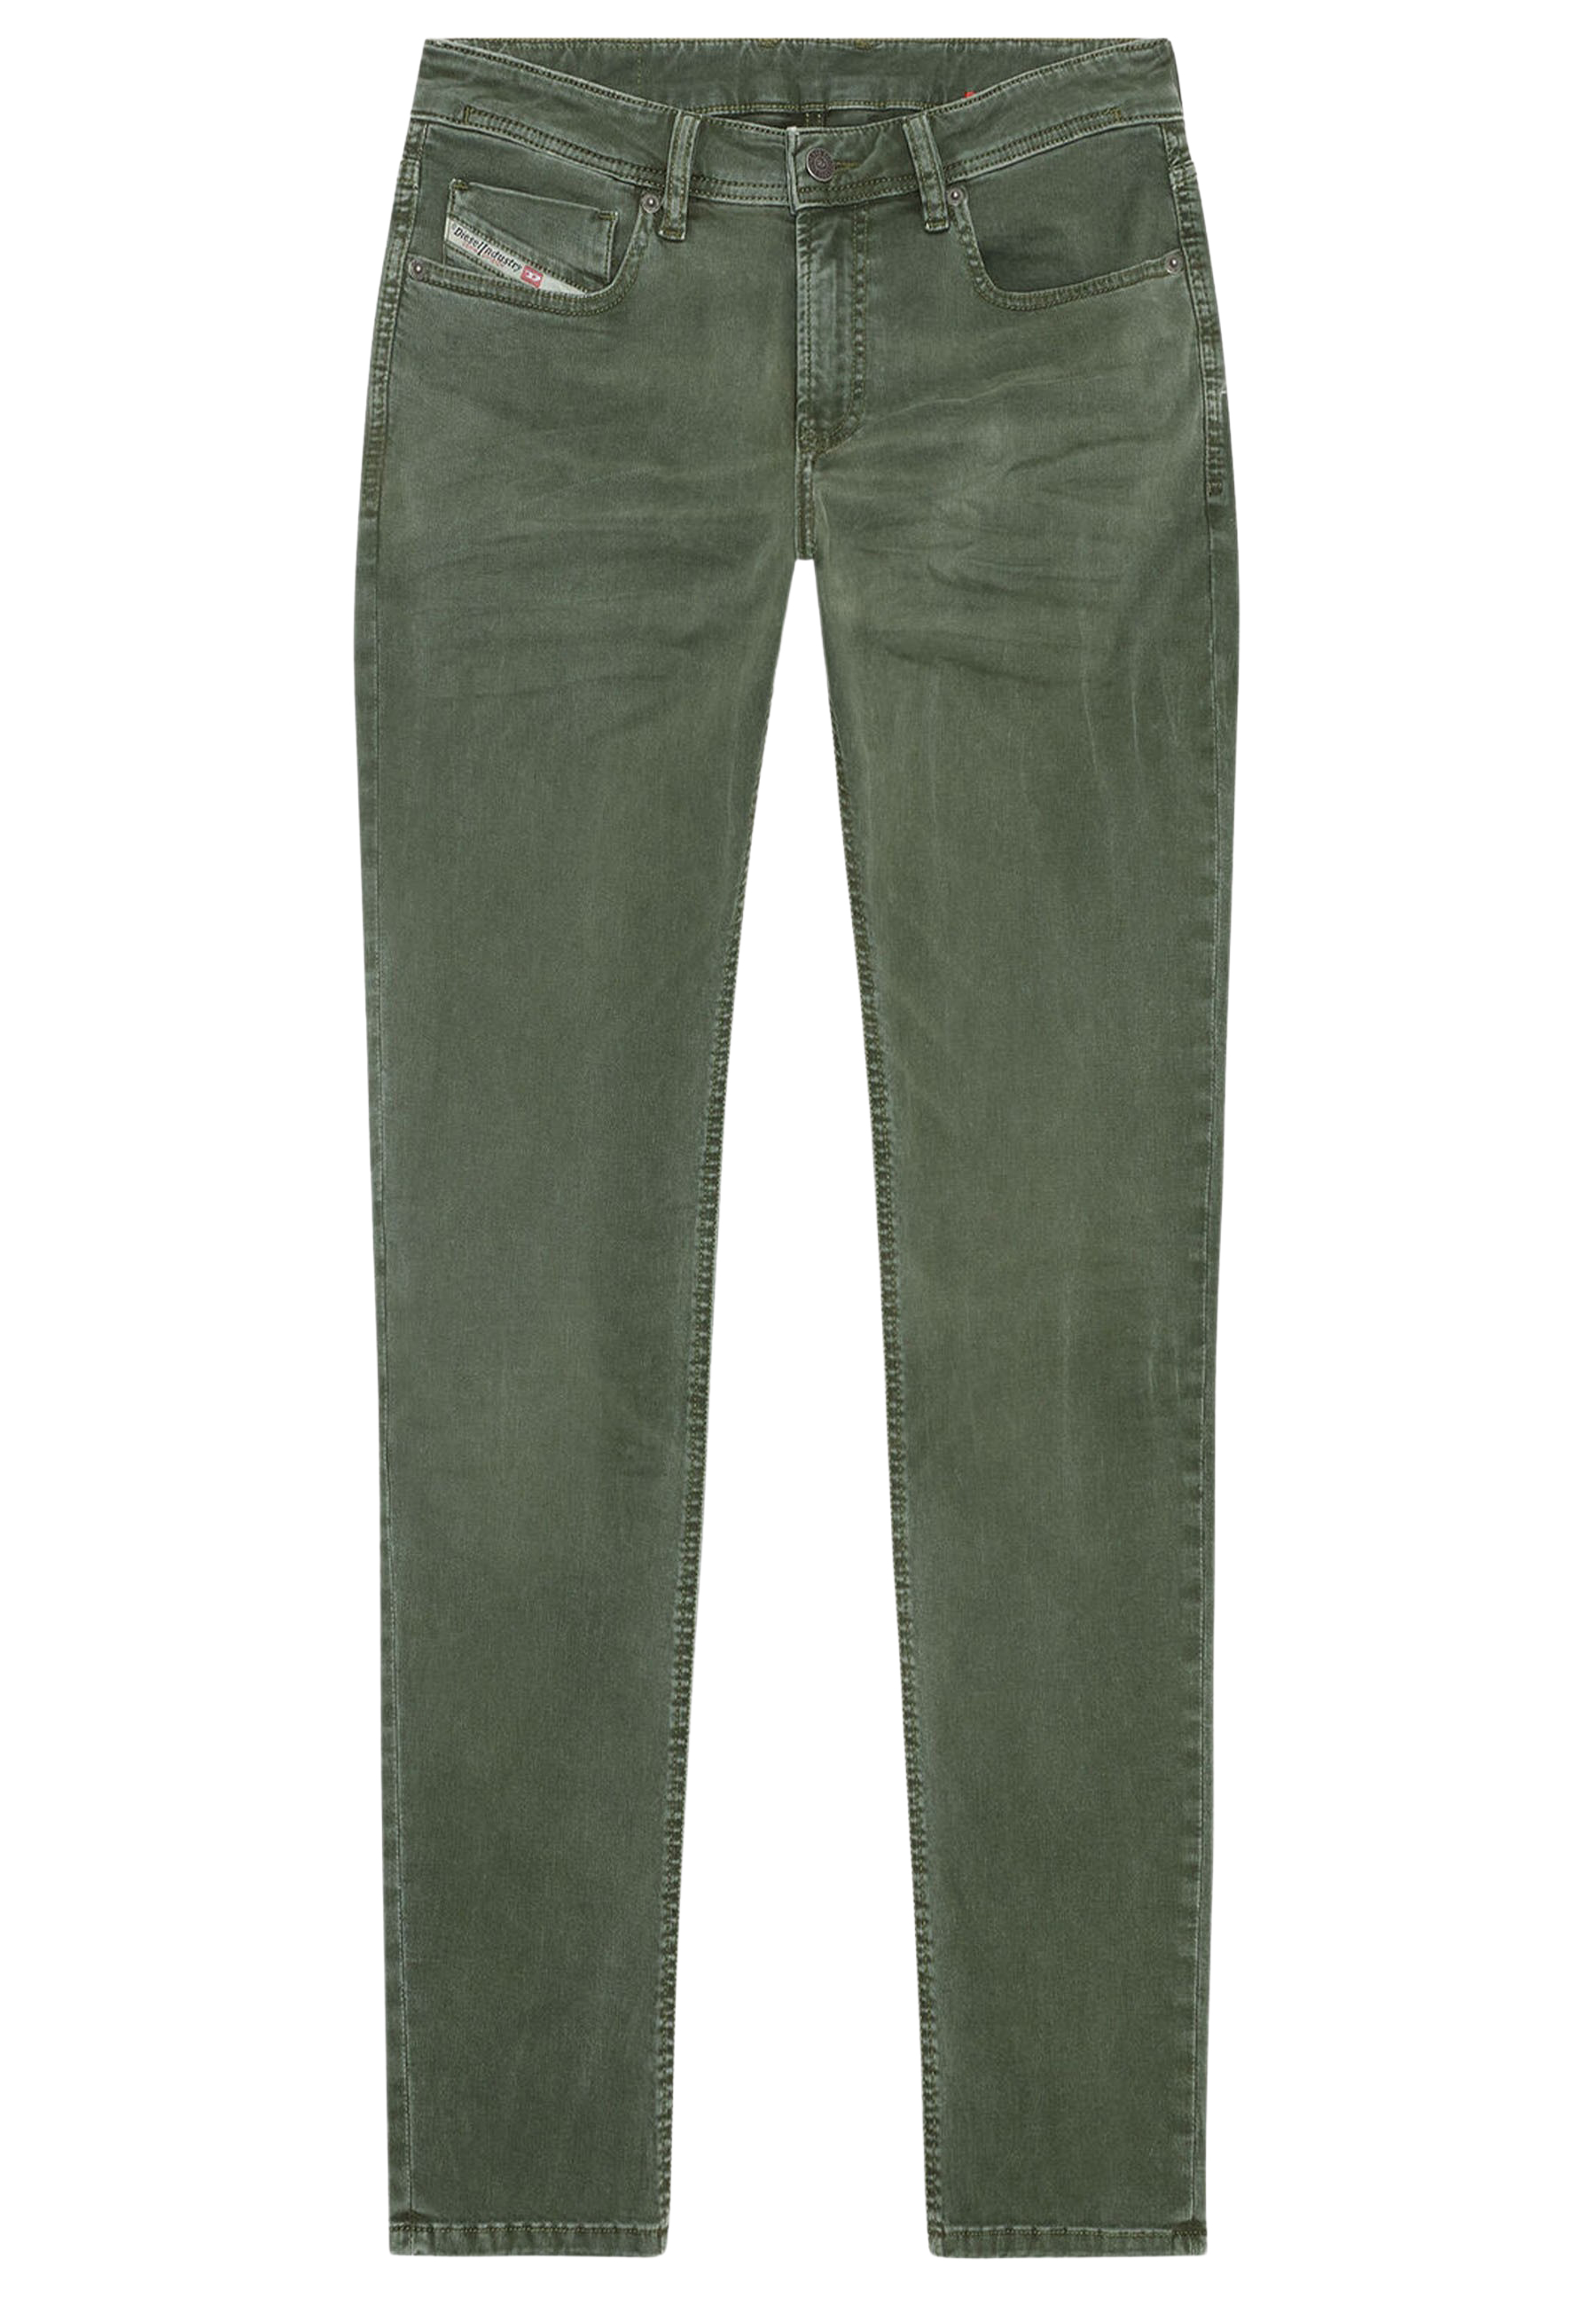 Diesel jeans groen Heren maat 33/34